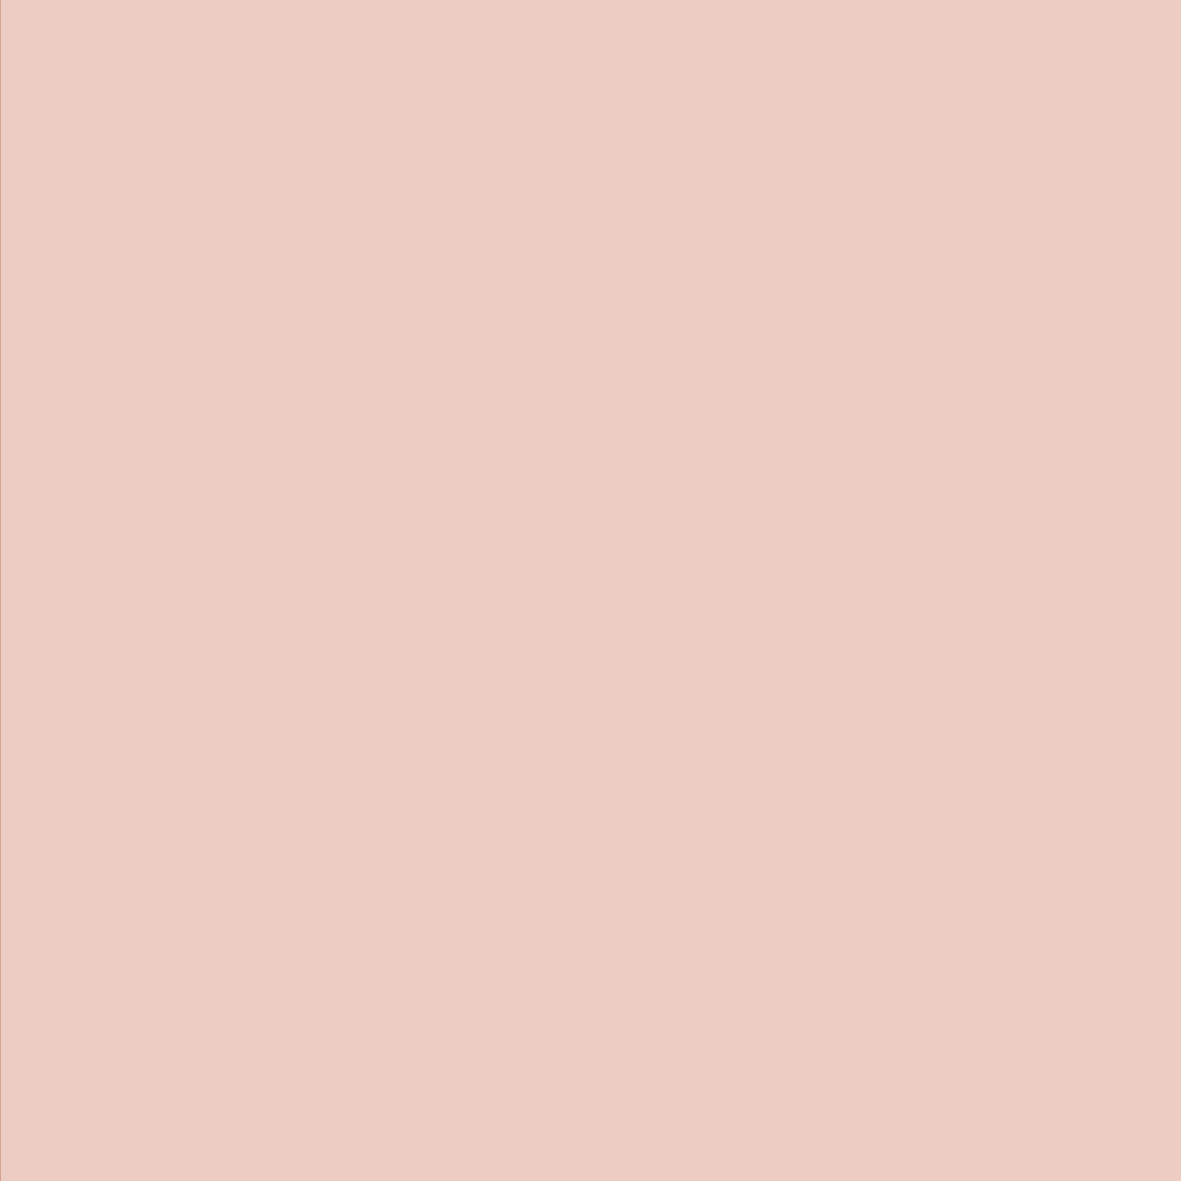 Cremiges Pink